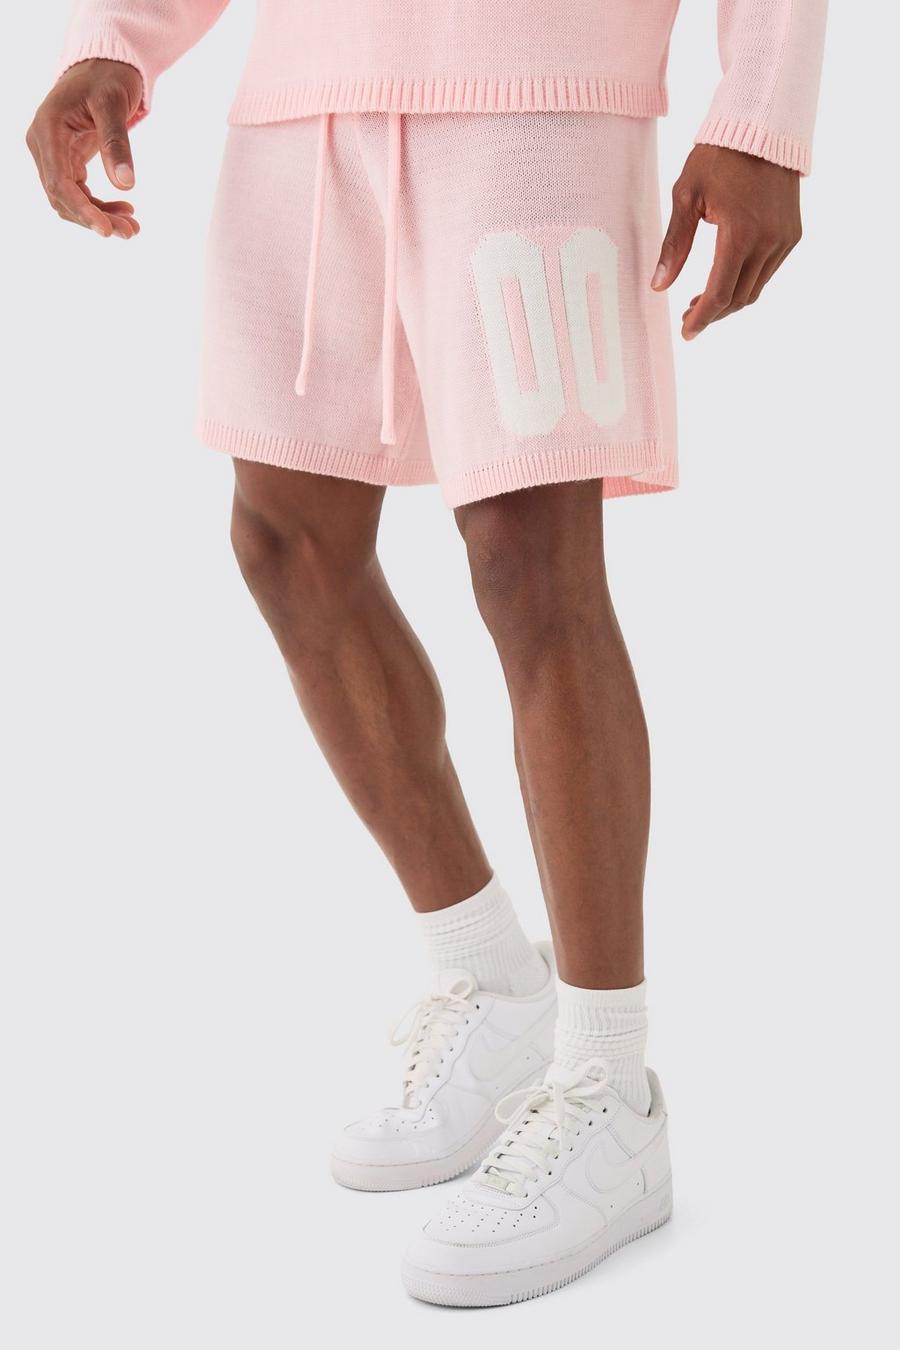 Lockere Jacquard Strick-Shorts, Pink